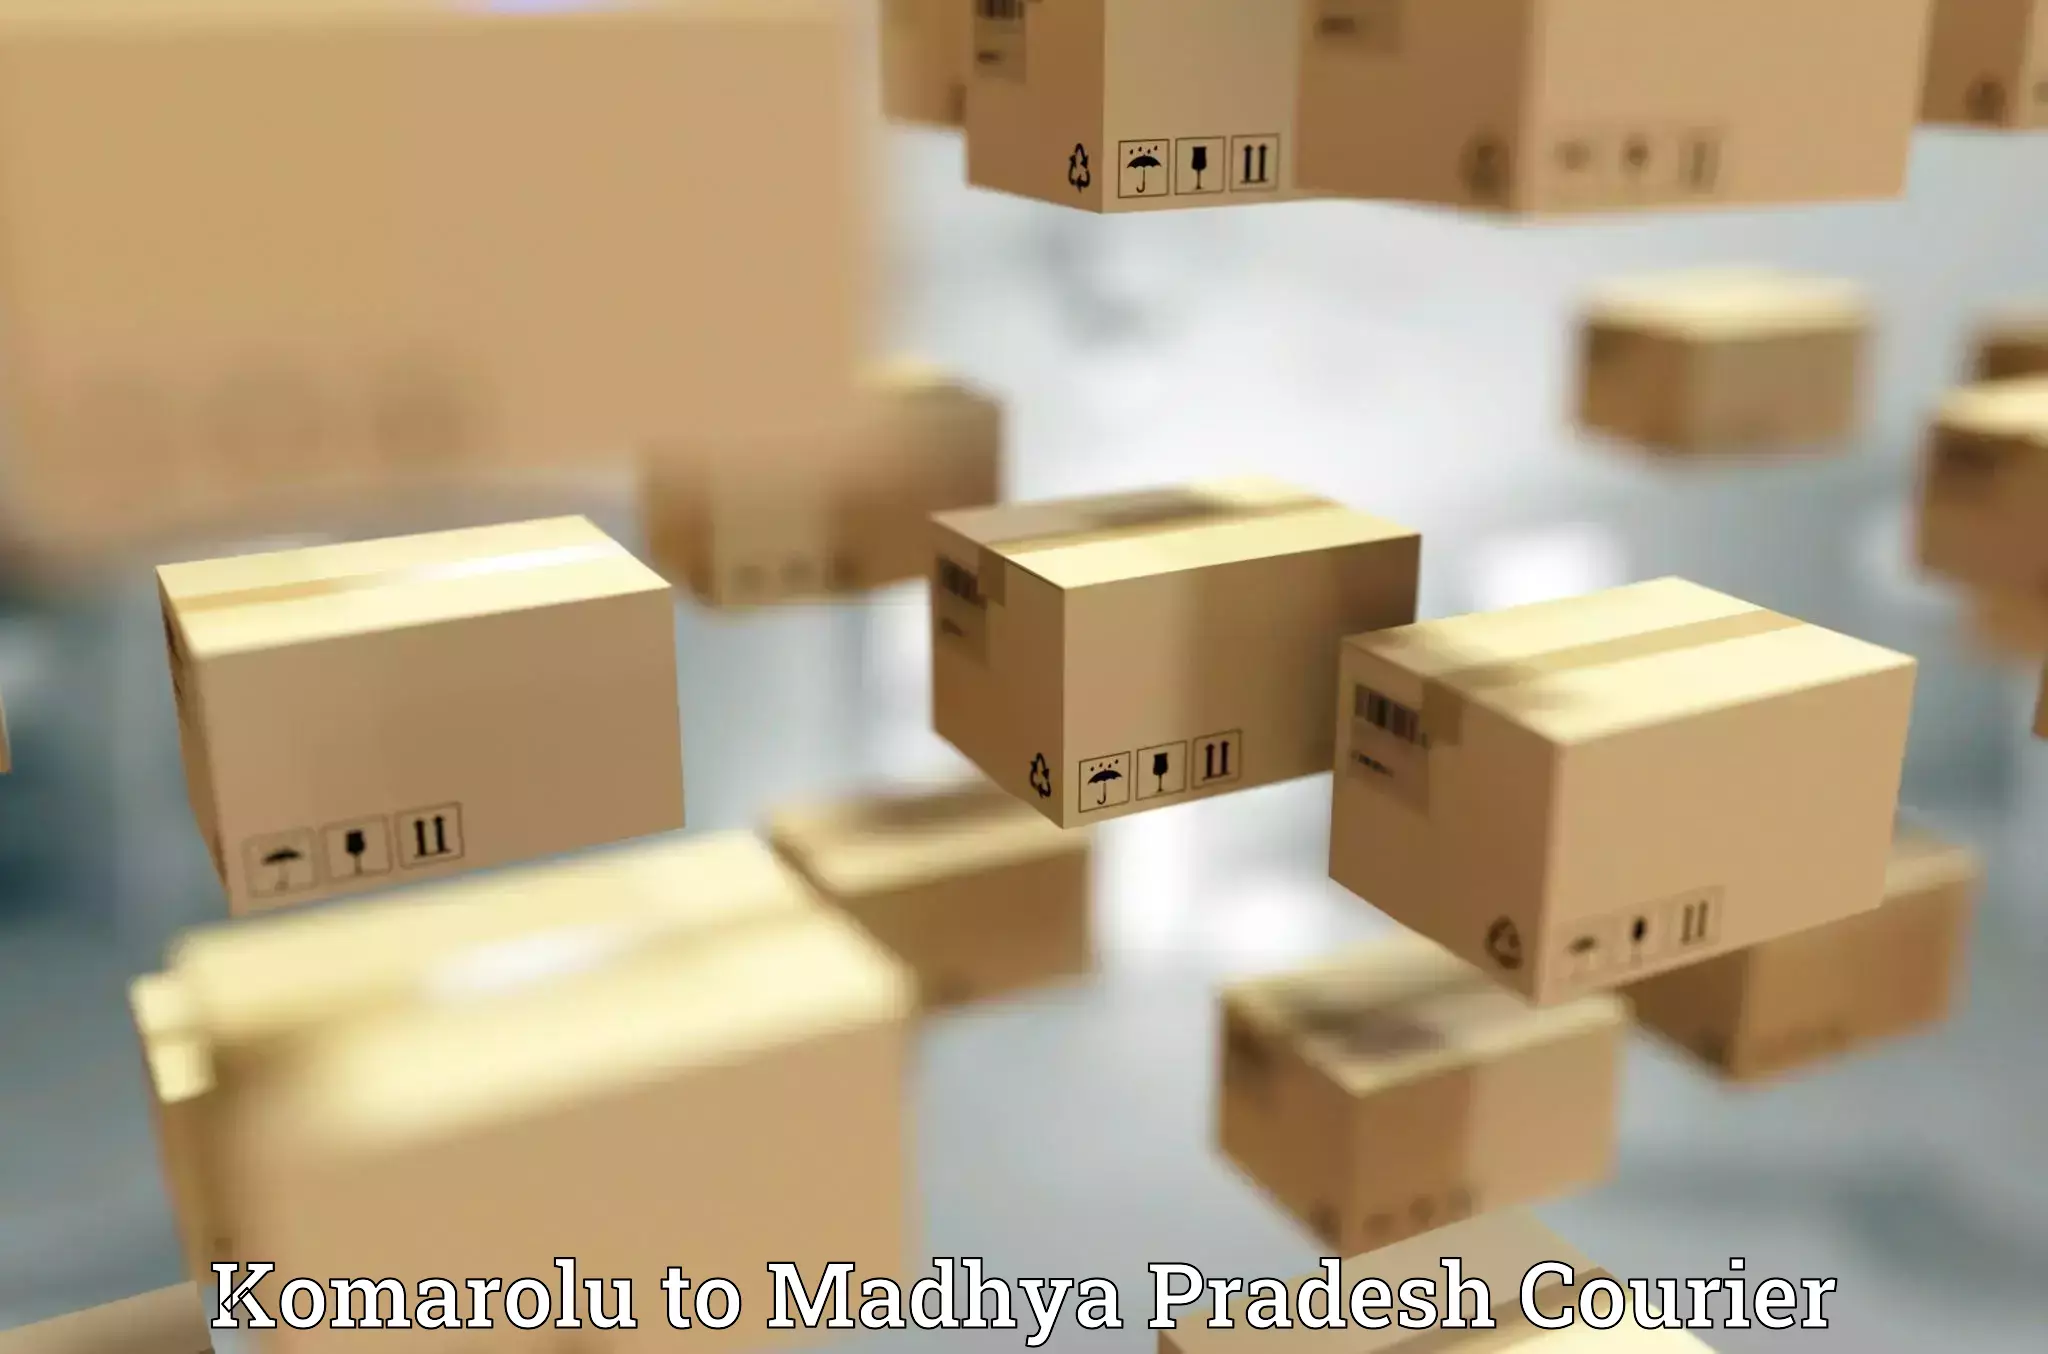 Multi-national courier services Komarolu to Madhya Pradesh